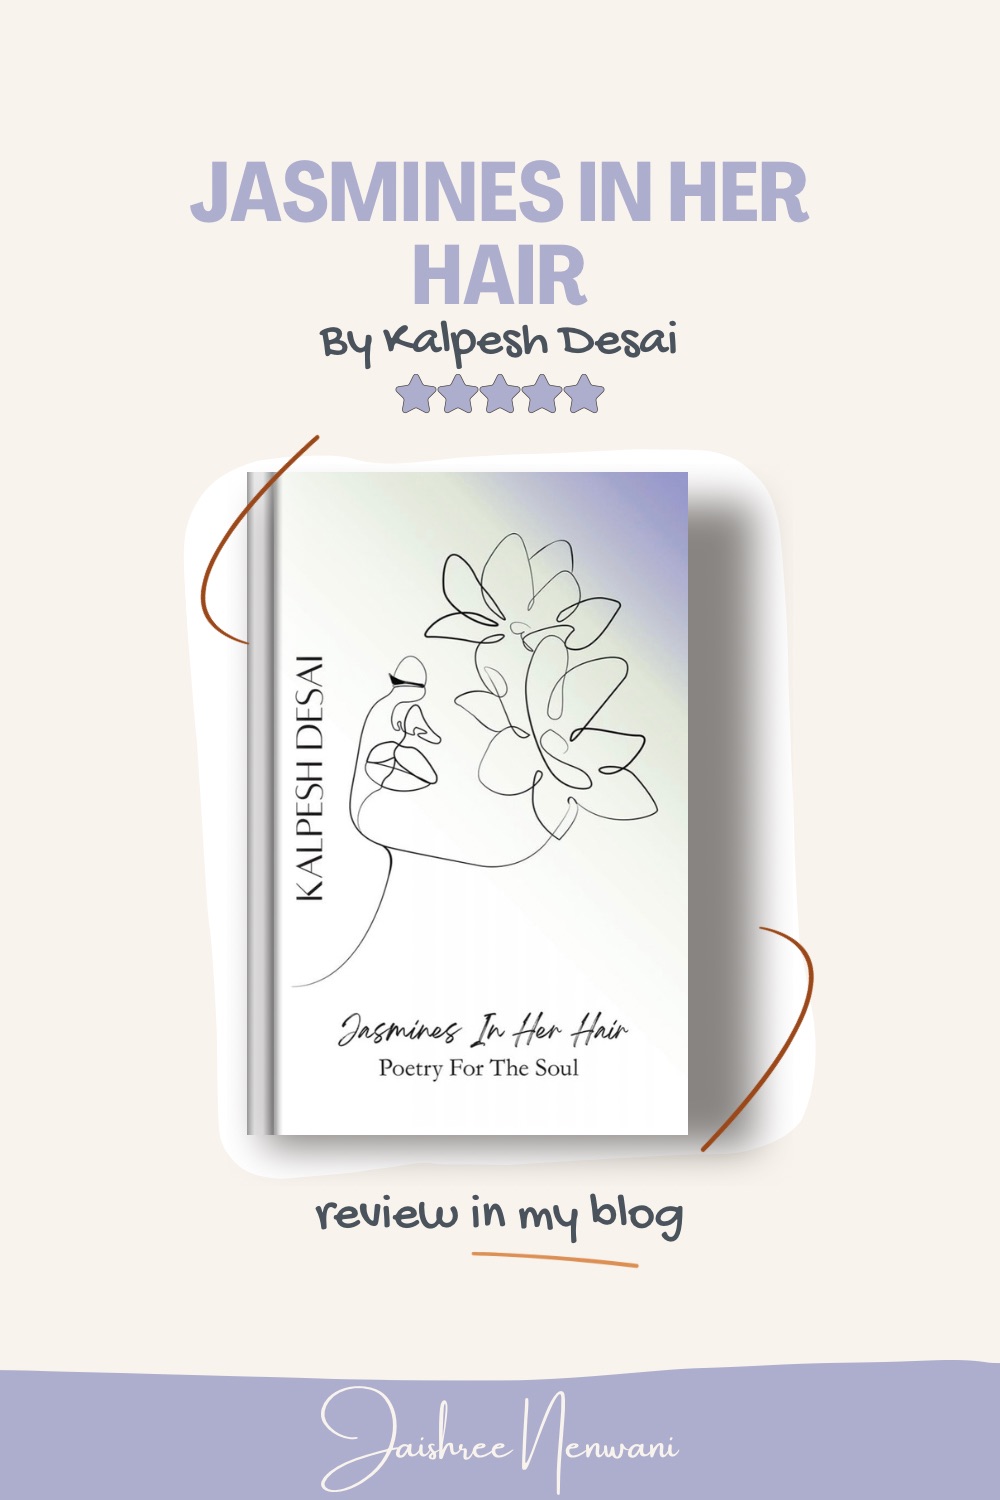 Jasmines in her hair by Kalpesh Desai book review 